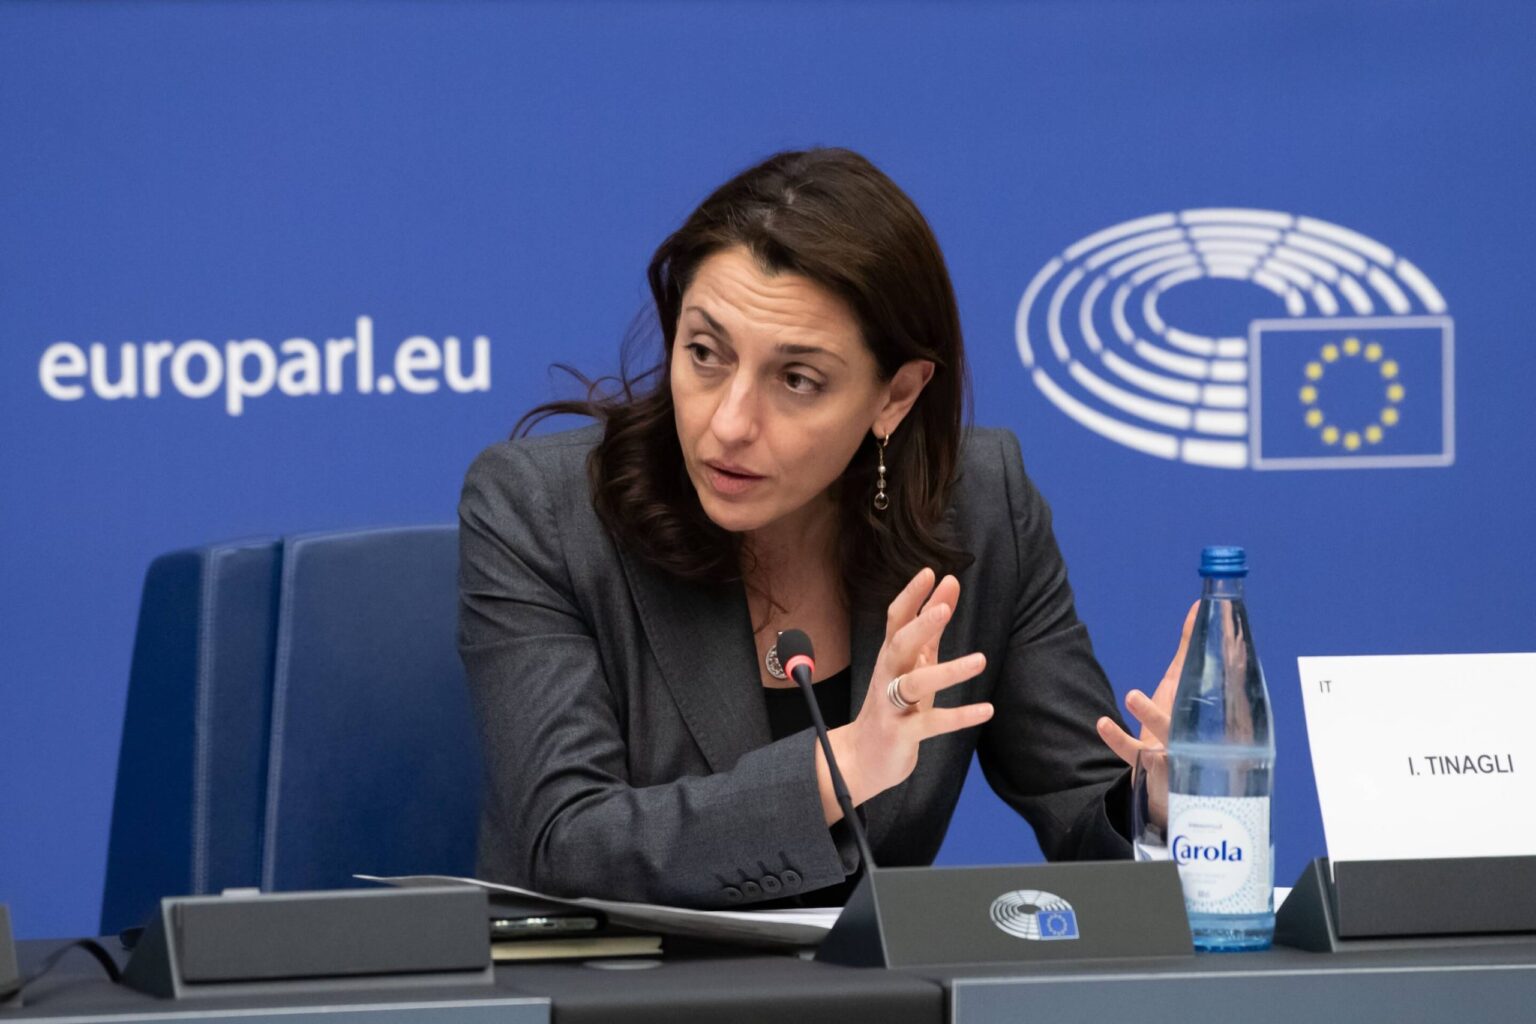 We need to protect EU citizens’ bank deposits: Italian economist and MEP Irene Tinagli